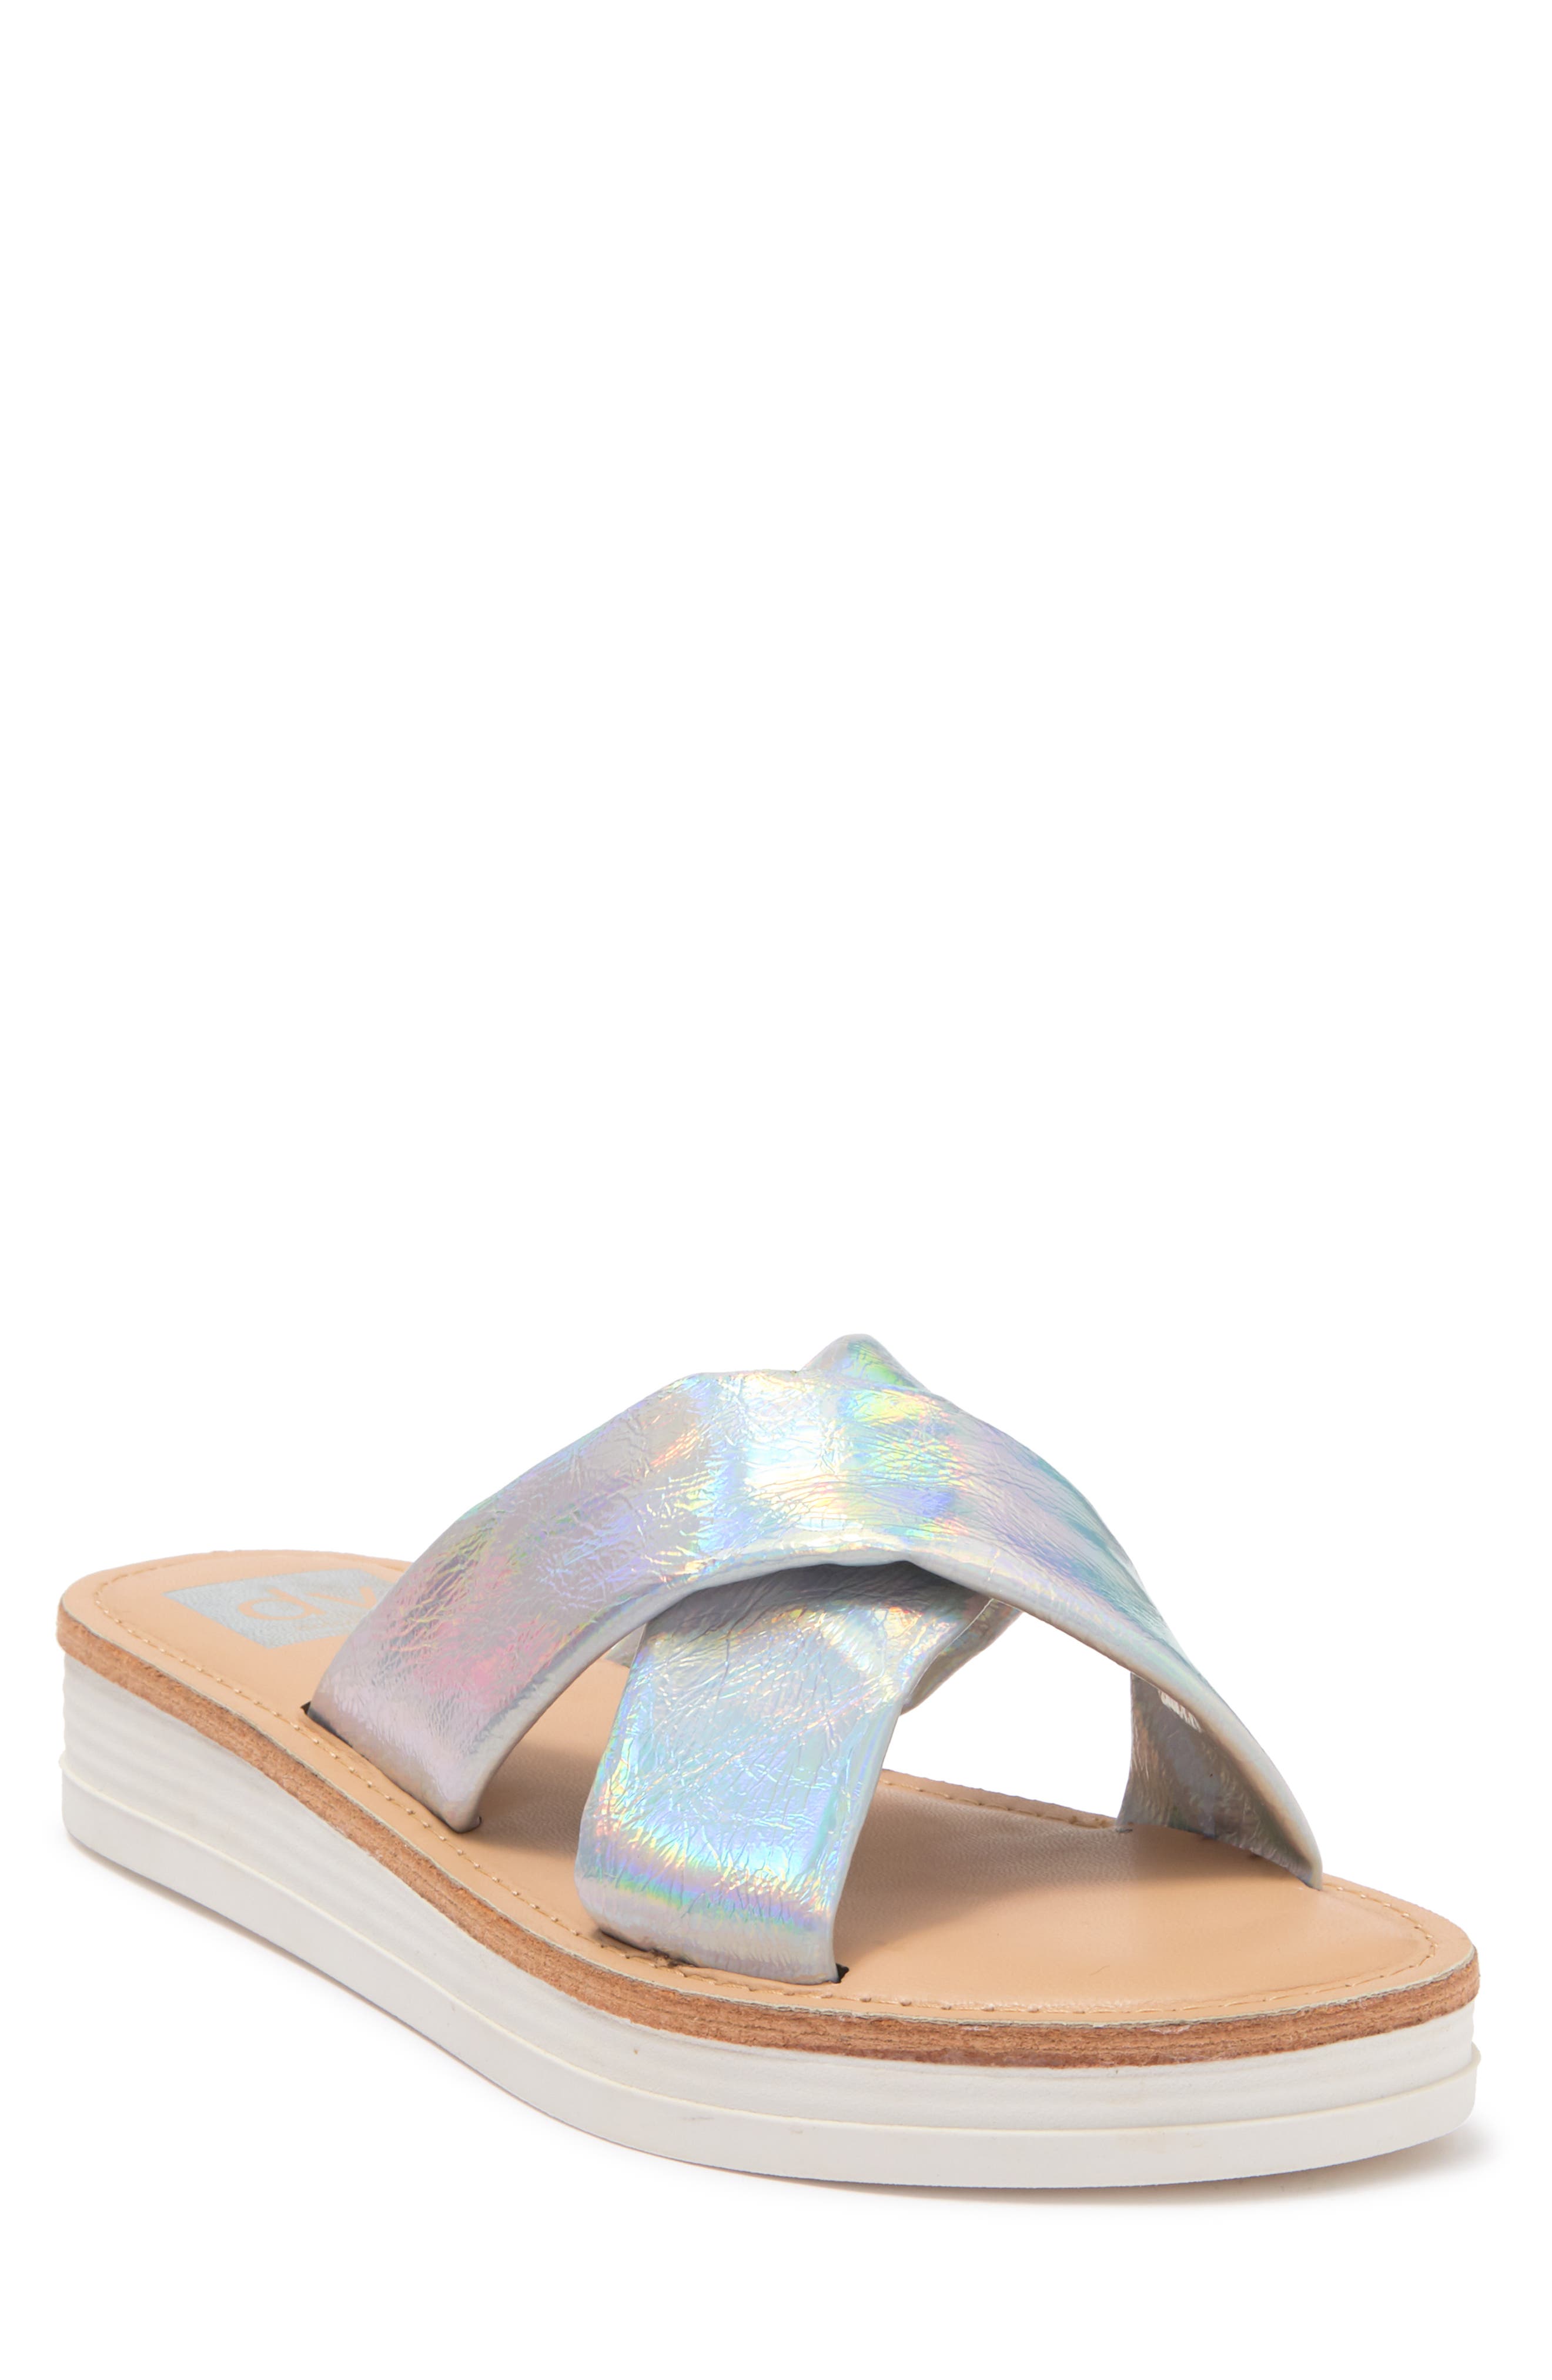 Dolce Vita Hondli Platform Slide Sandal In Iridescent